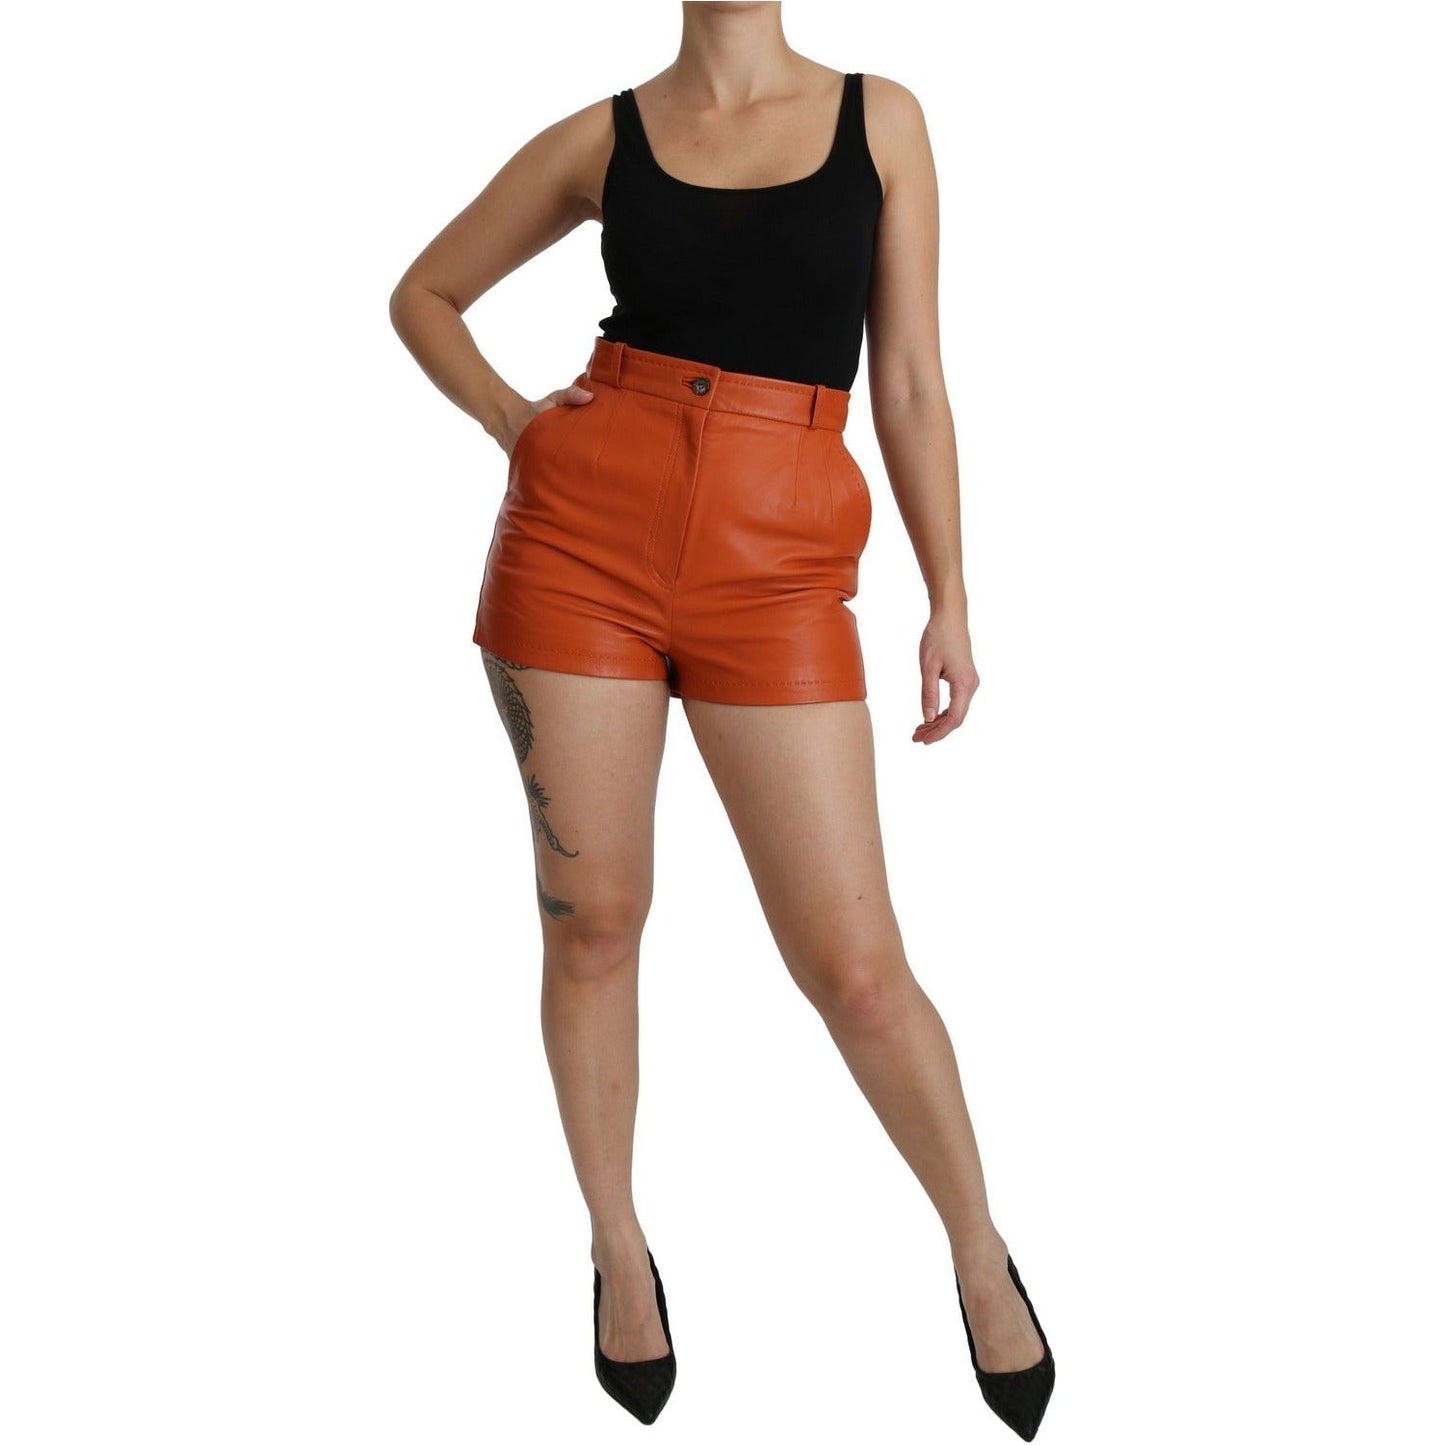 Dolce & Gabbana Orange Leather High Waist Hot Pants Shorts orange-leather-high-waist-hot-pants-shorts Shorts IMG_2960-2-scaled-fde6a25e-f63.jpg